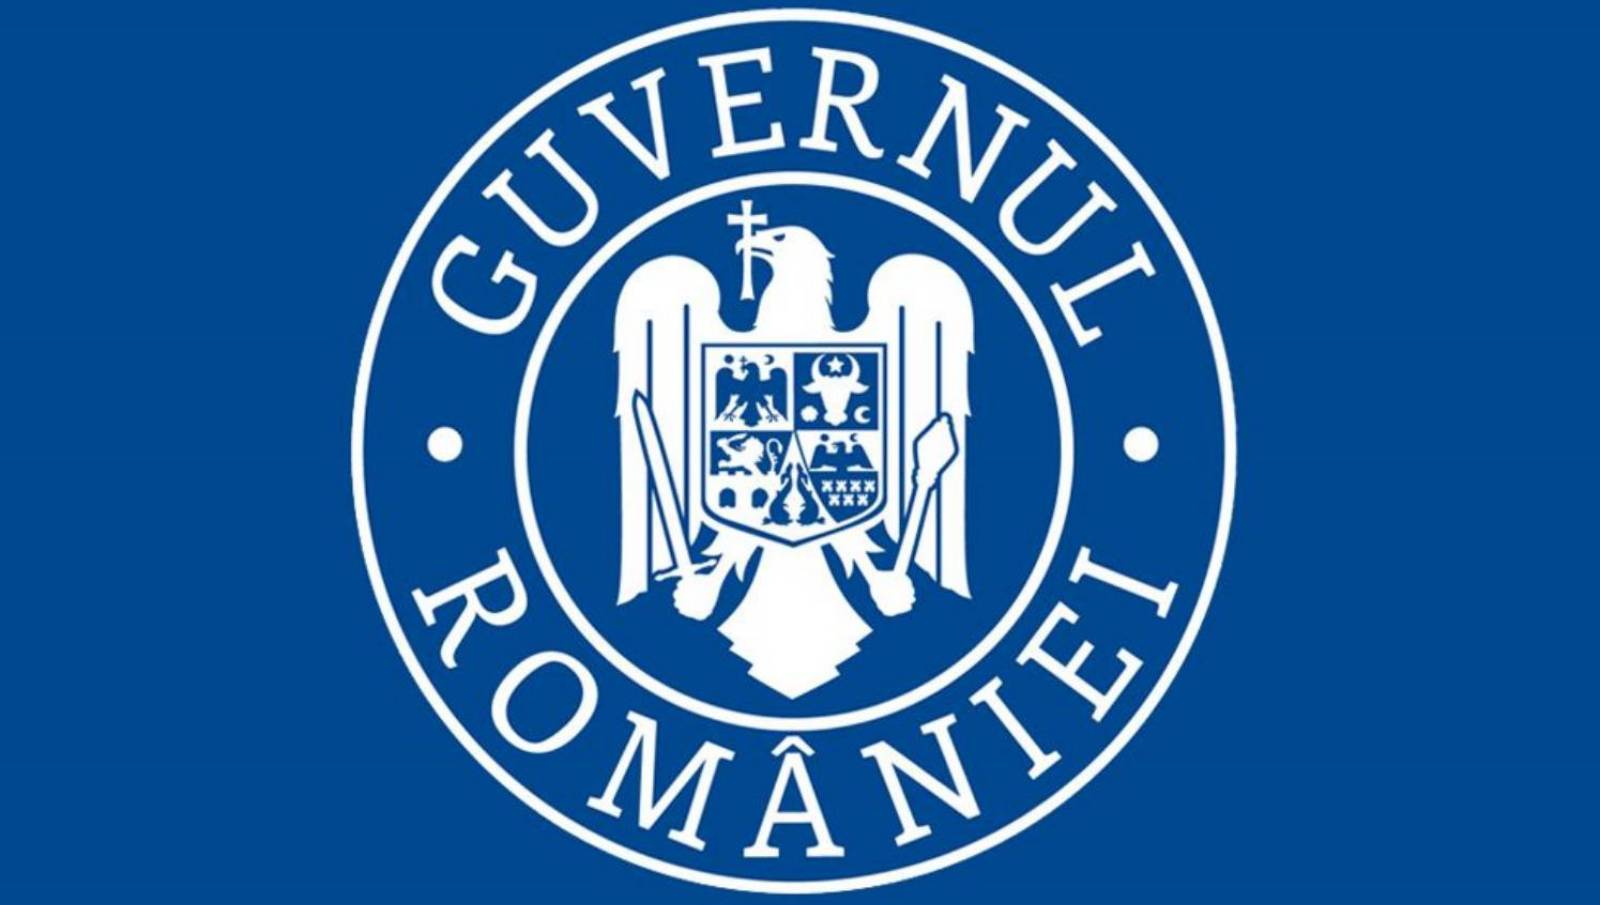 Guvernul Romaniei alerta sms pin